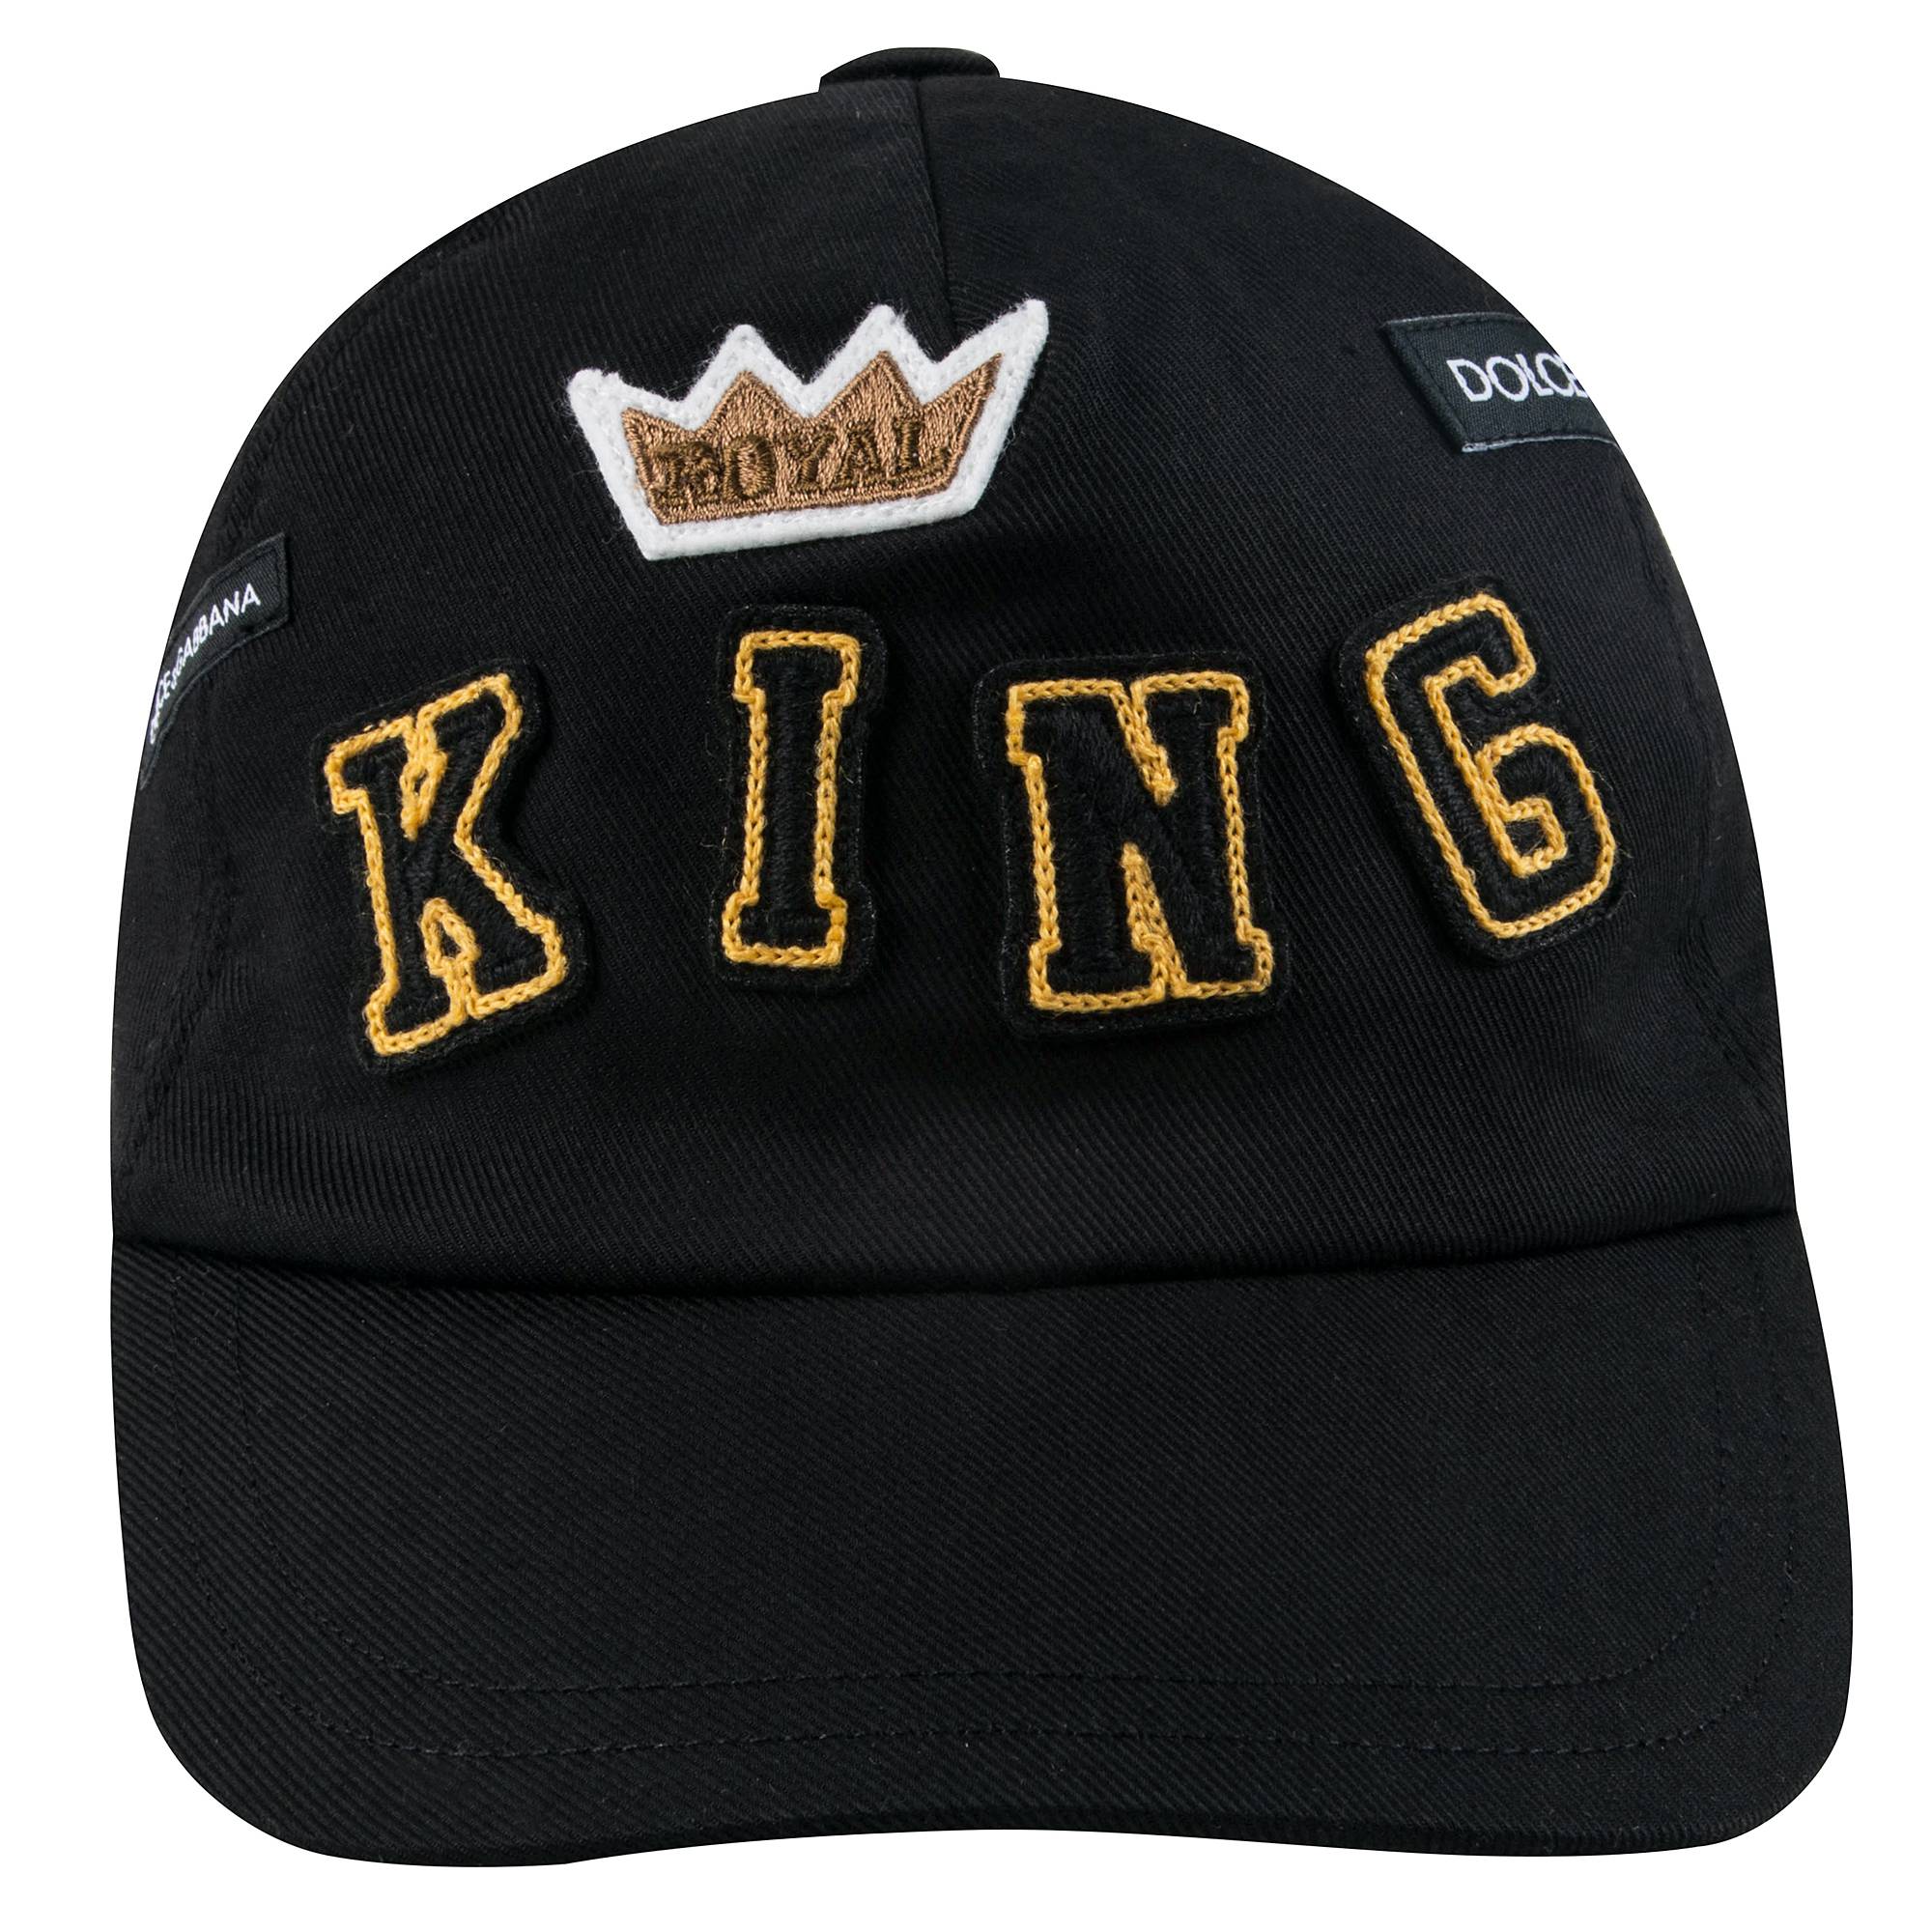 Boys Navy Blue "King" Hat